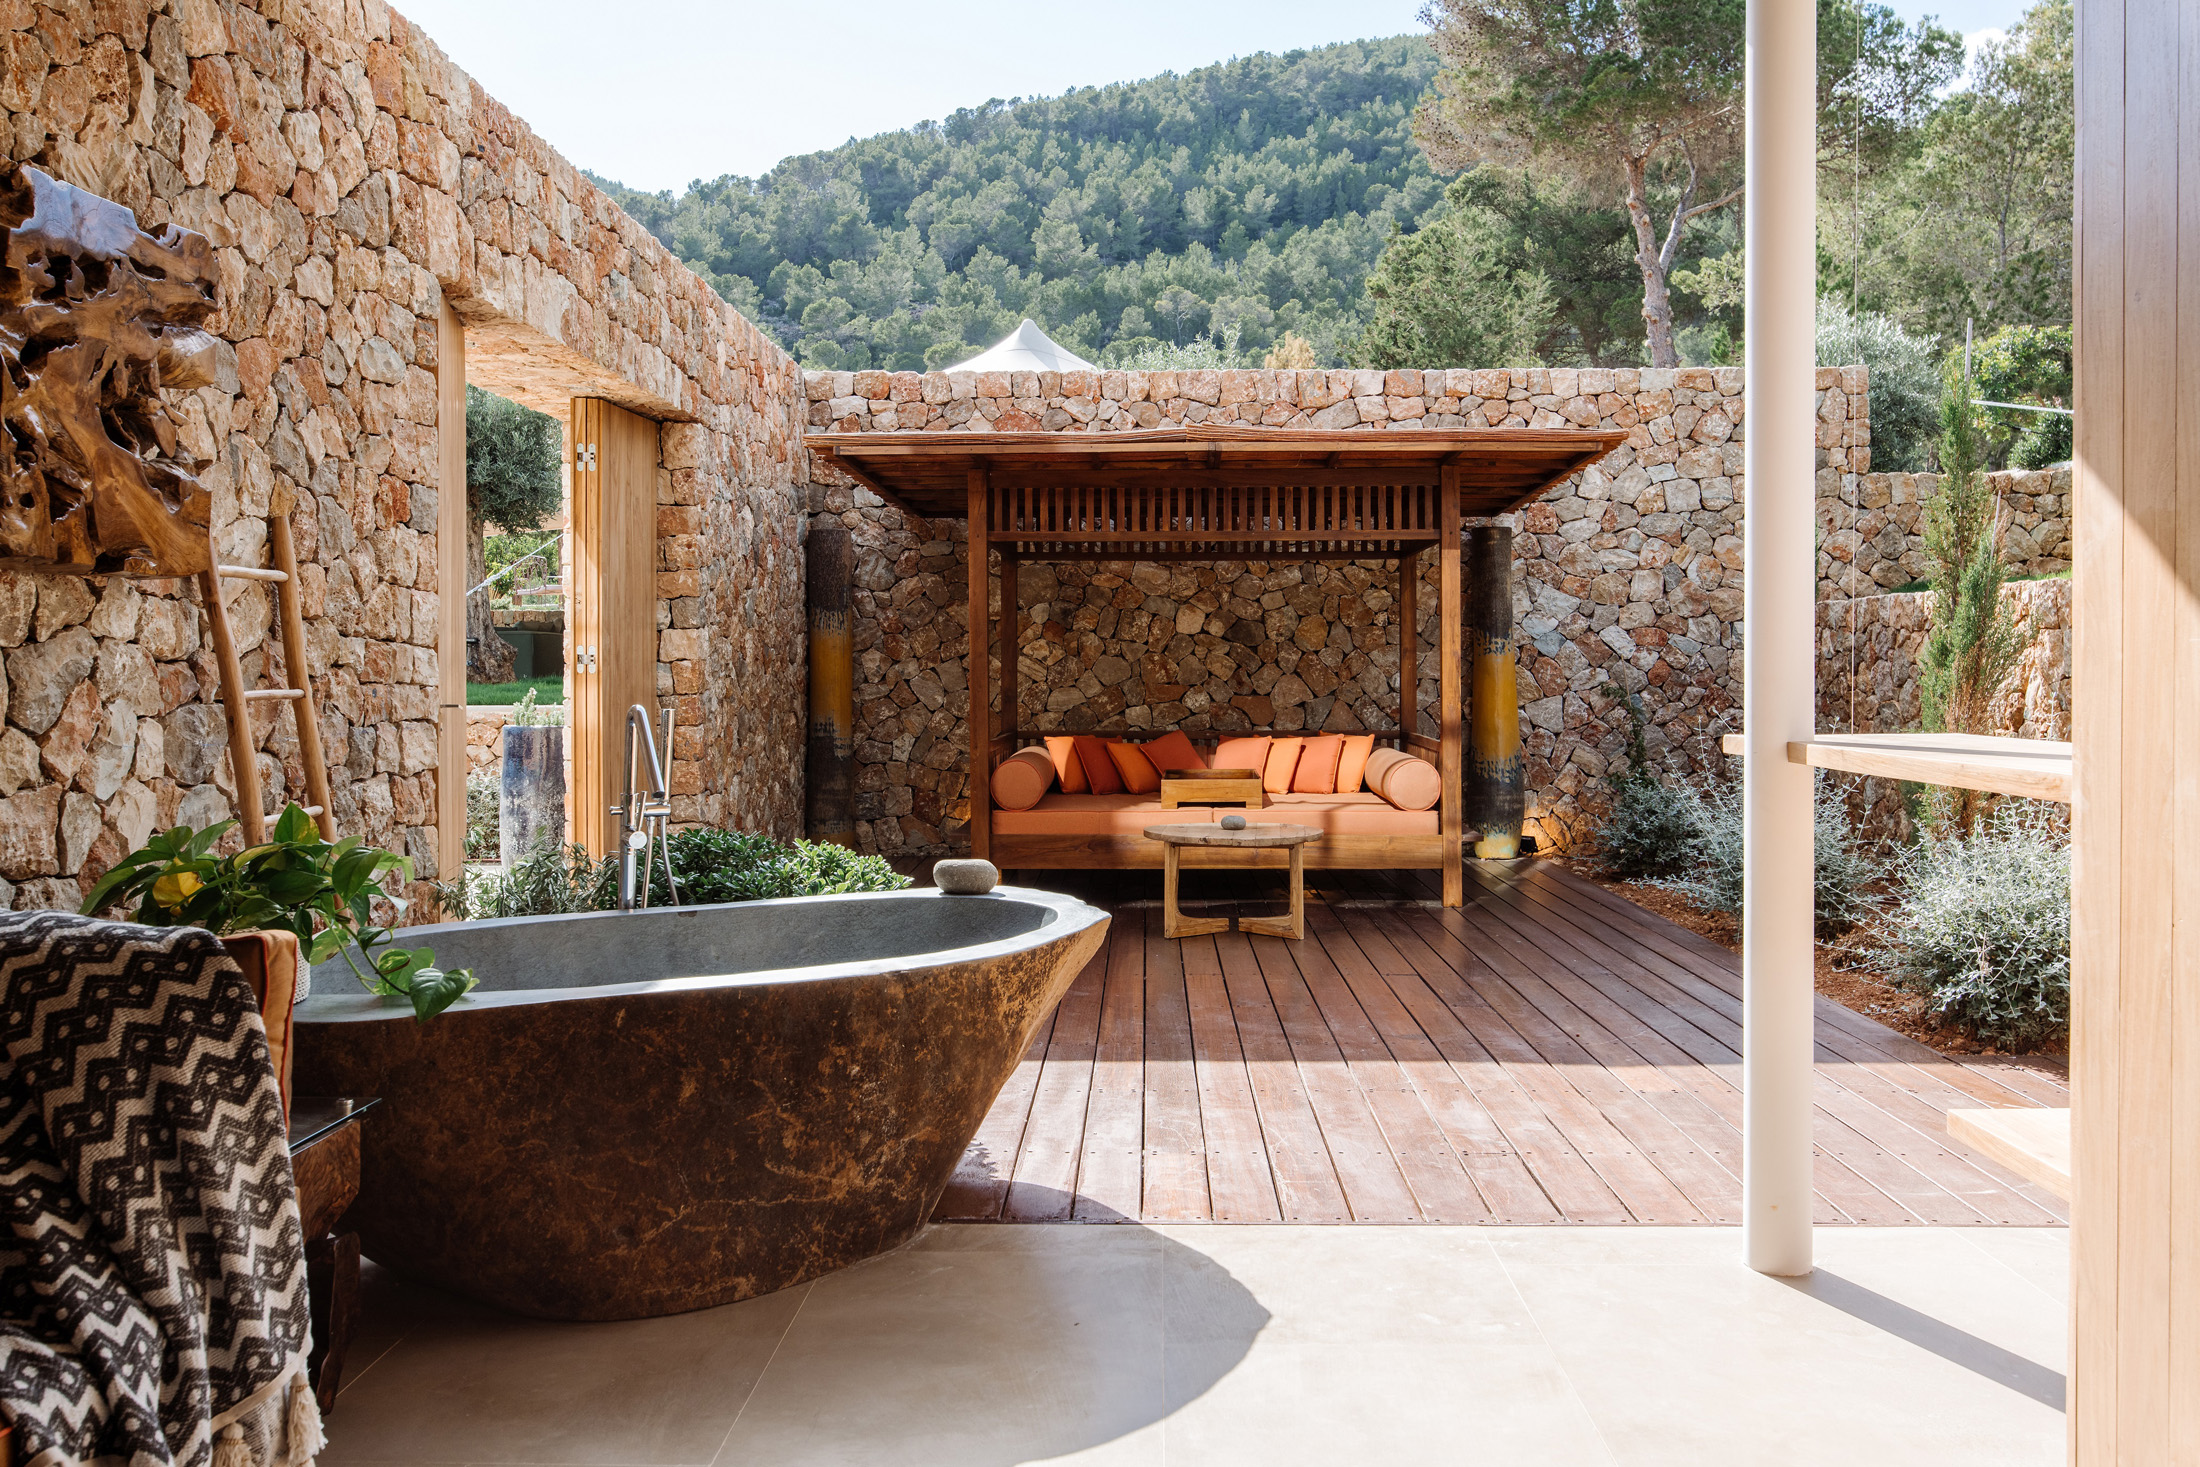 View of an outdoor bathroom at Can Sabina, a luxury villa in Ibiza